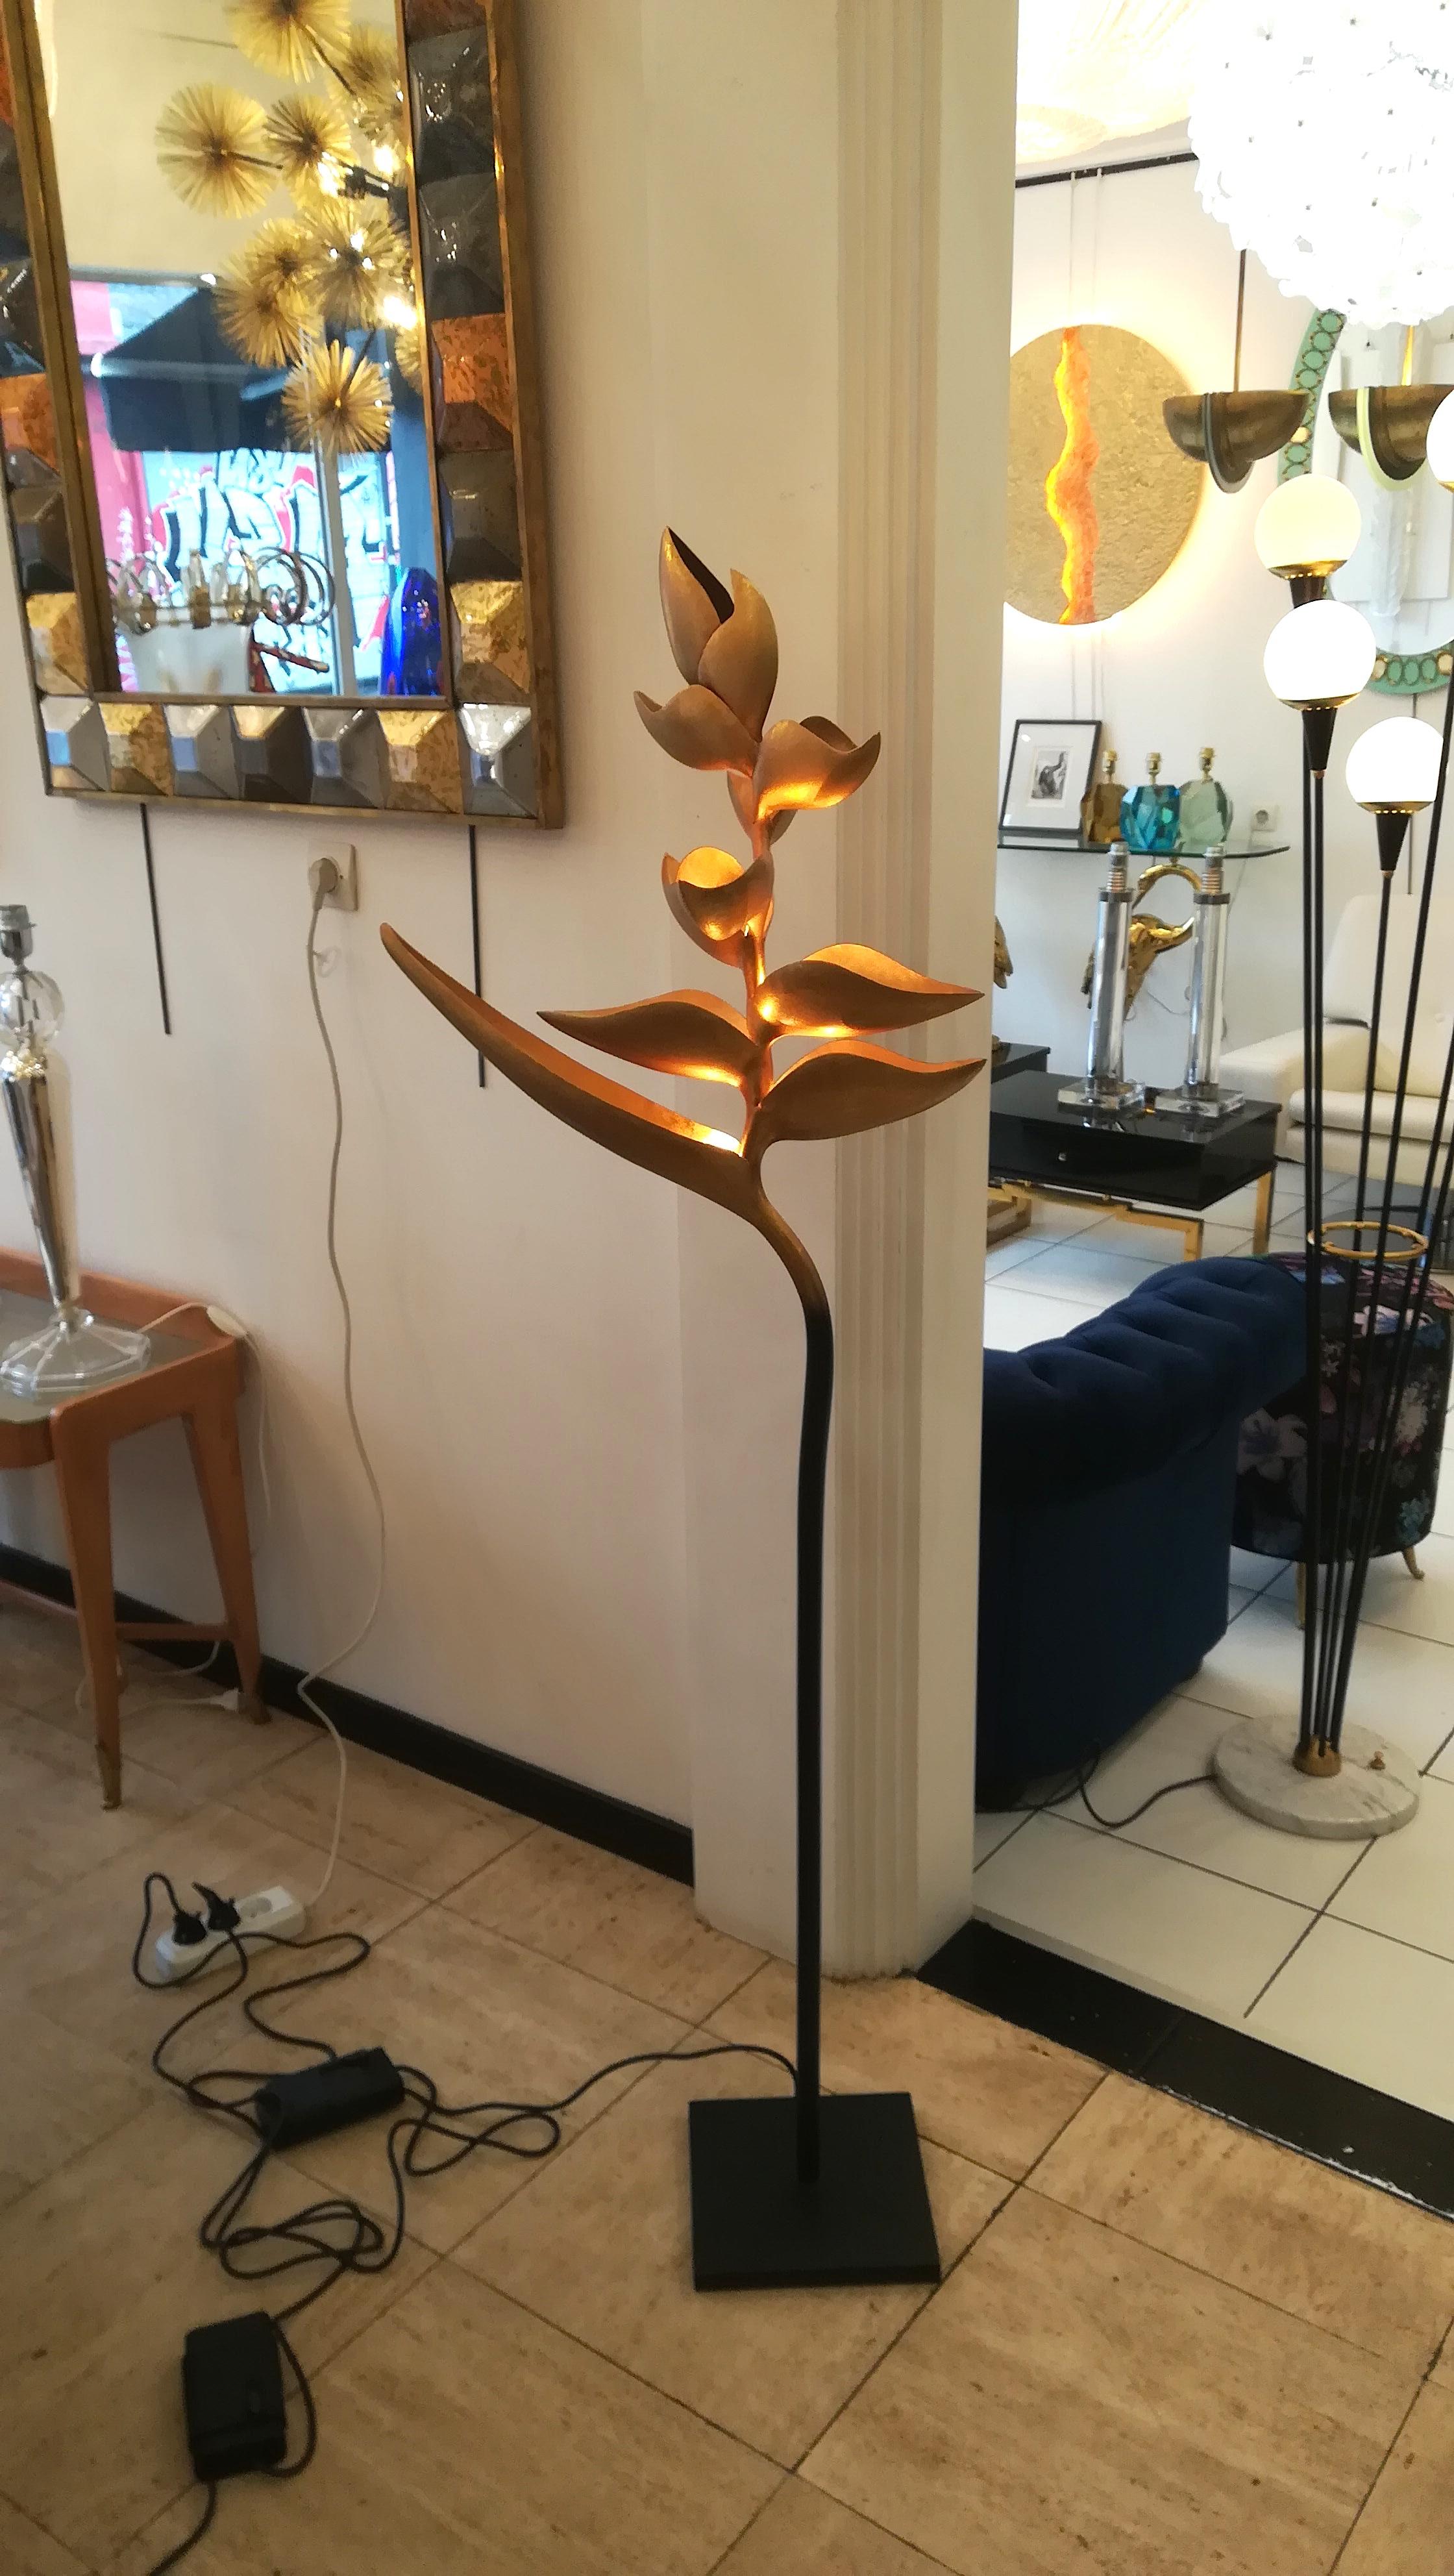 Floor lamp in the shape of paradise birds flowers. H 155 cm
Base: 23 x 23cm.